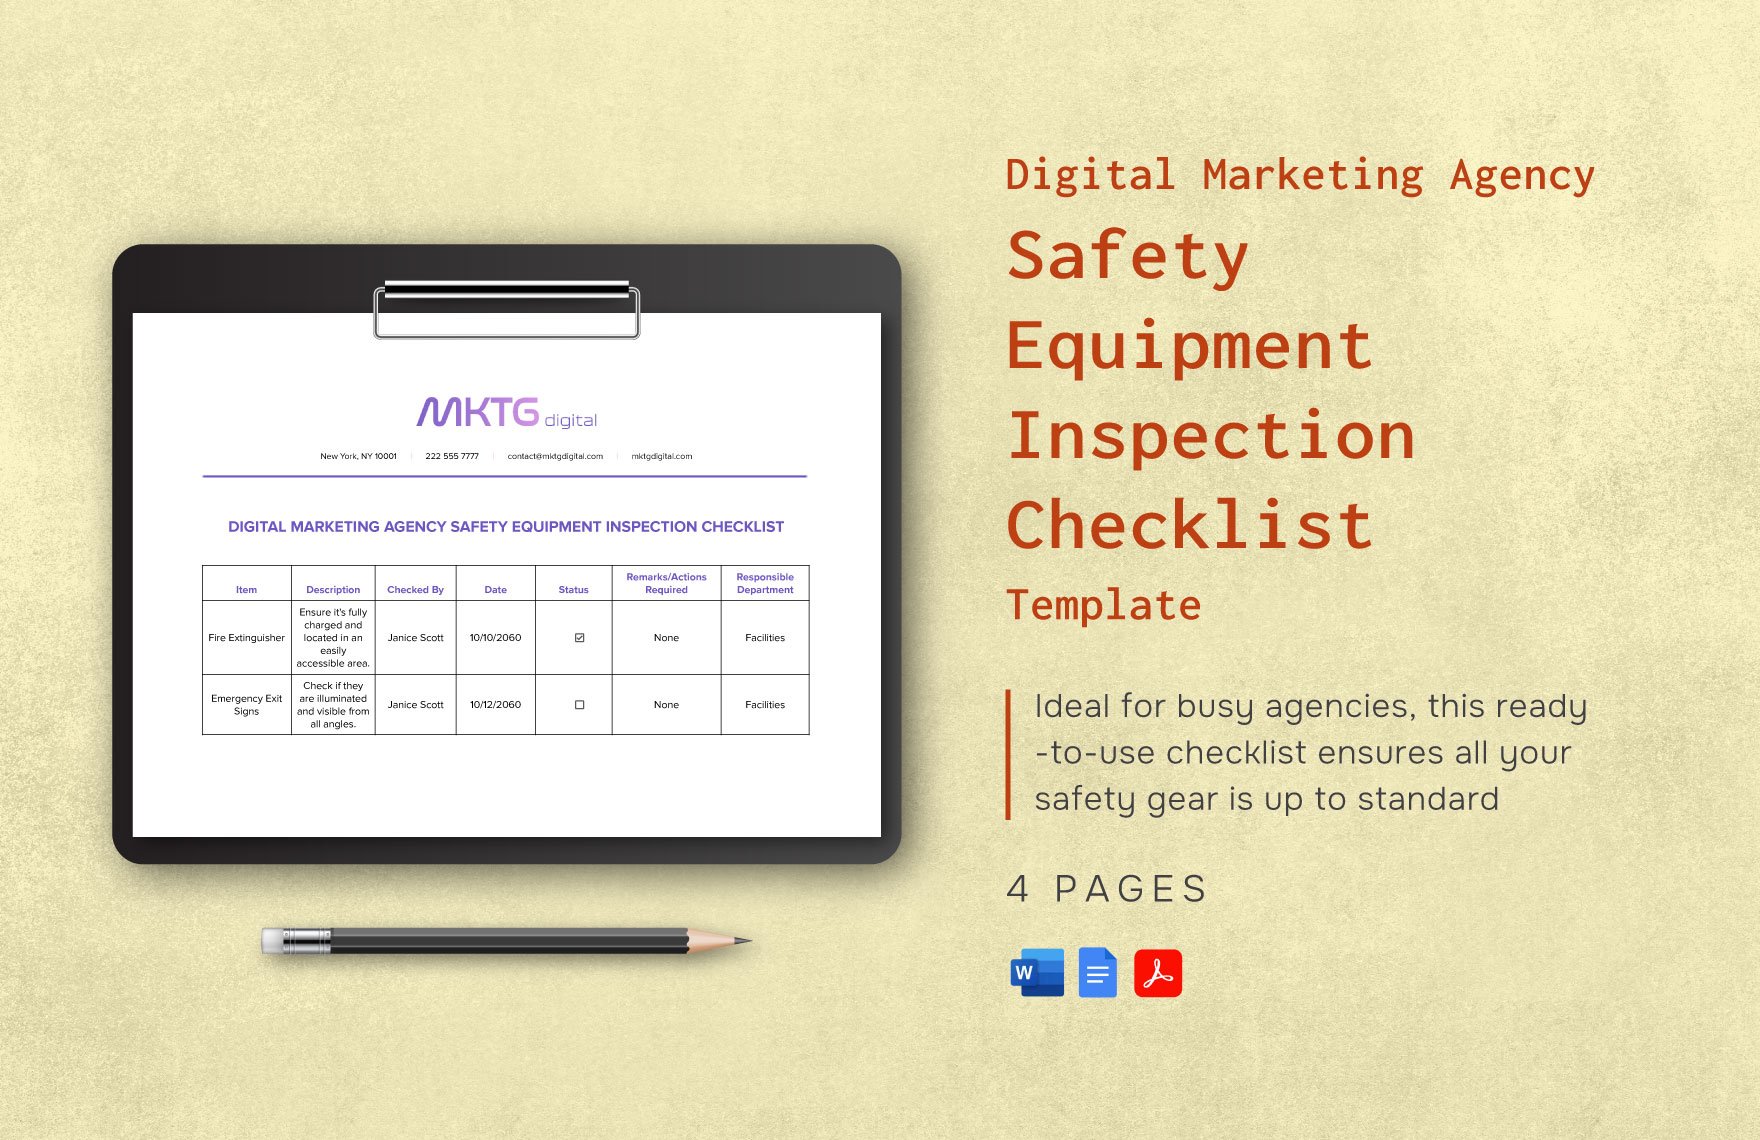 Digital Marketing Agency Safety Equipment Inspection Checklist Template